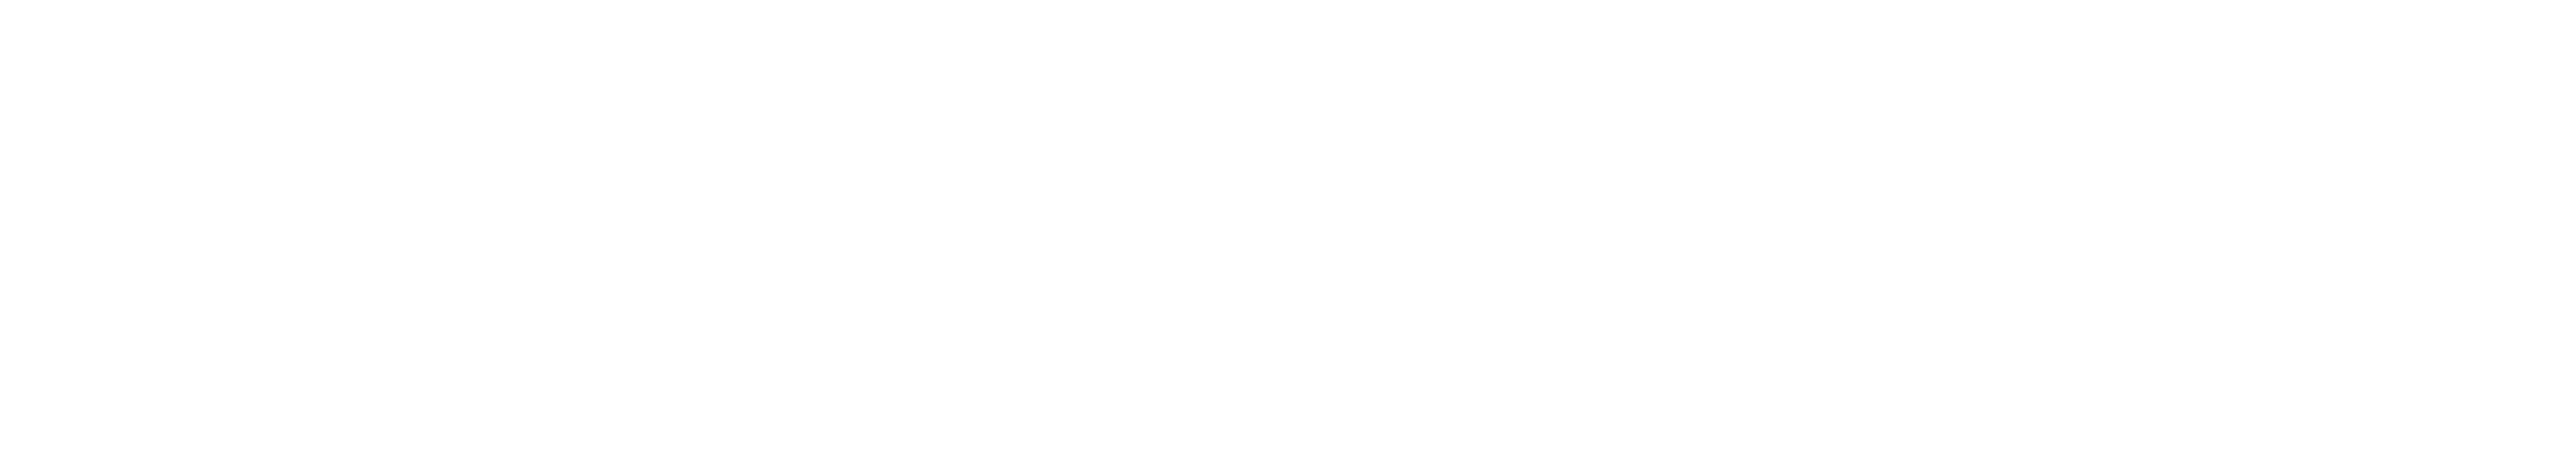 Life skills logo white